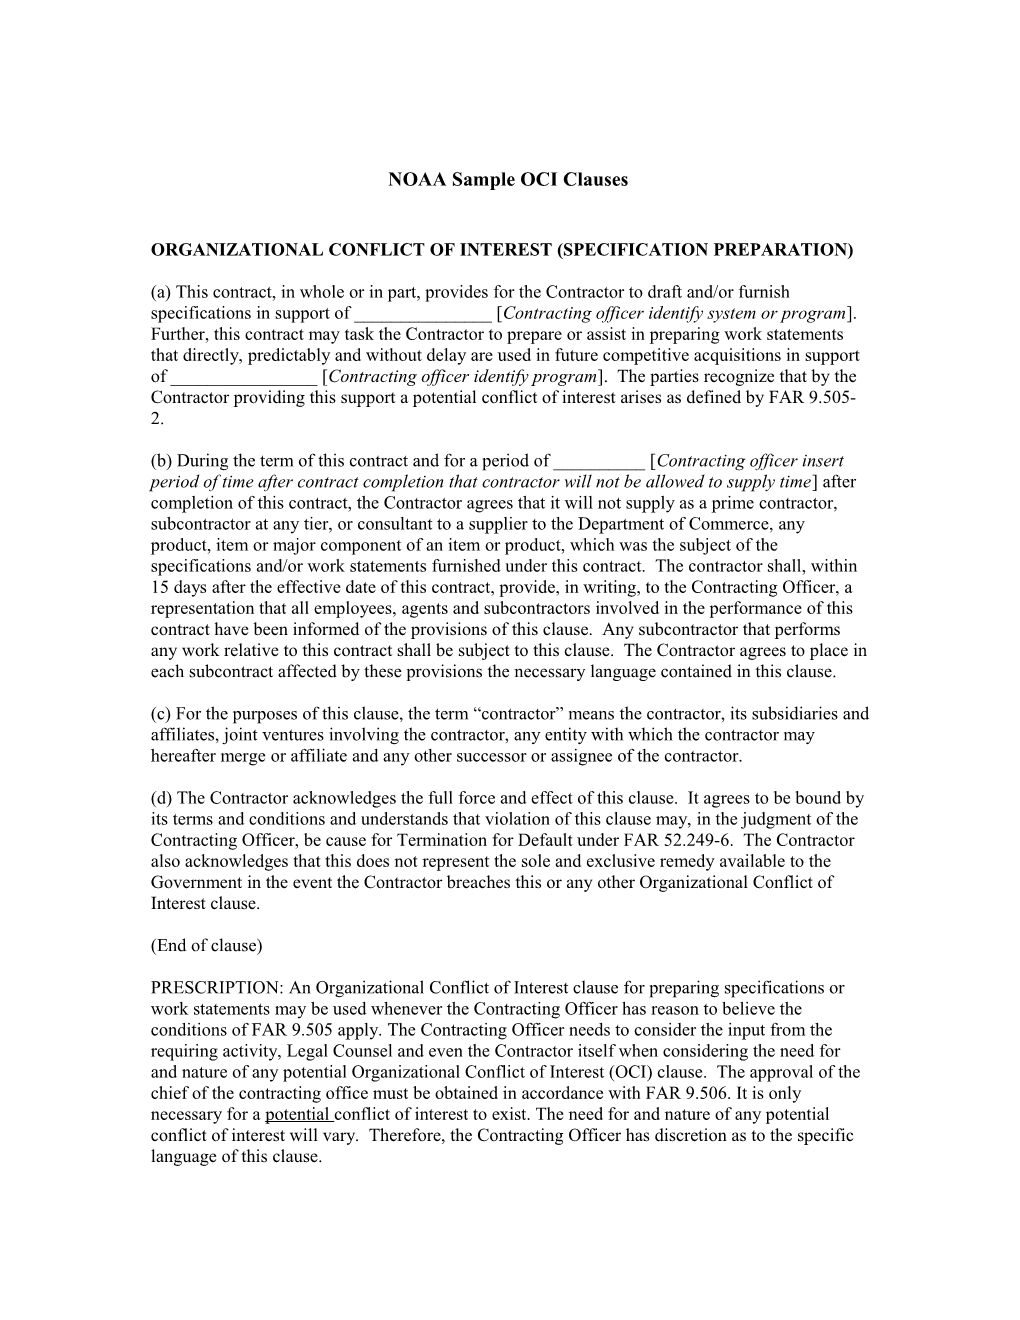 L-339 Notice of Organizational Conflict of Interest (Dec 1999)